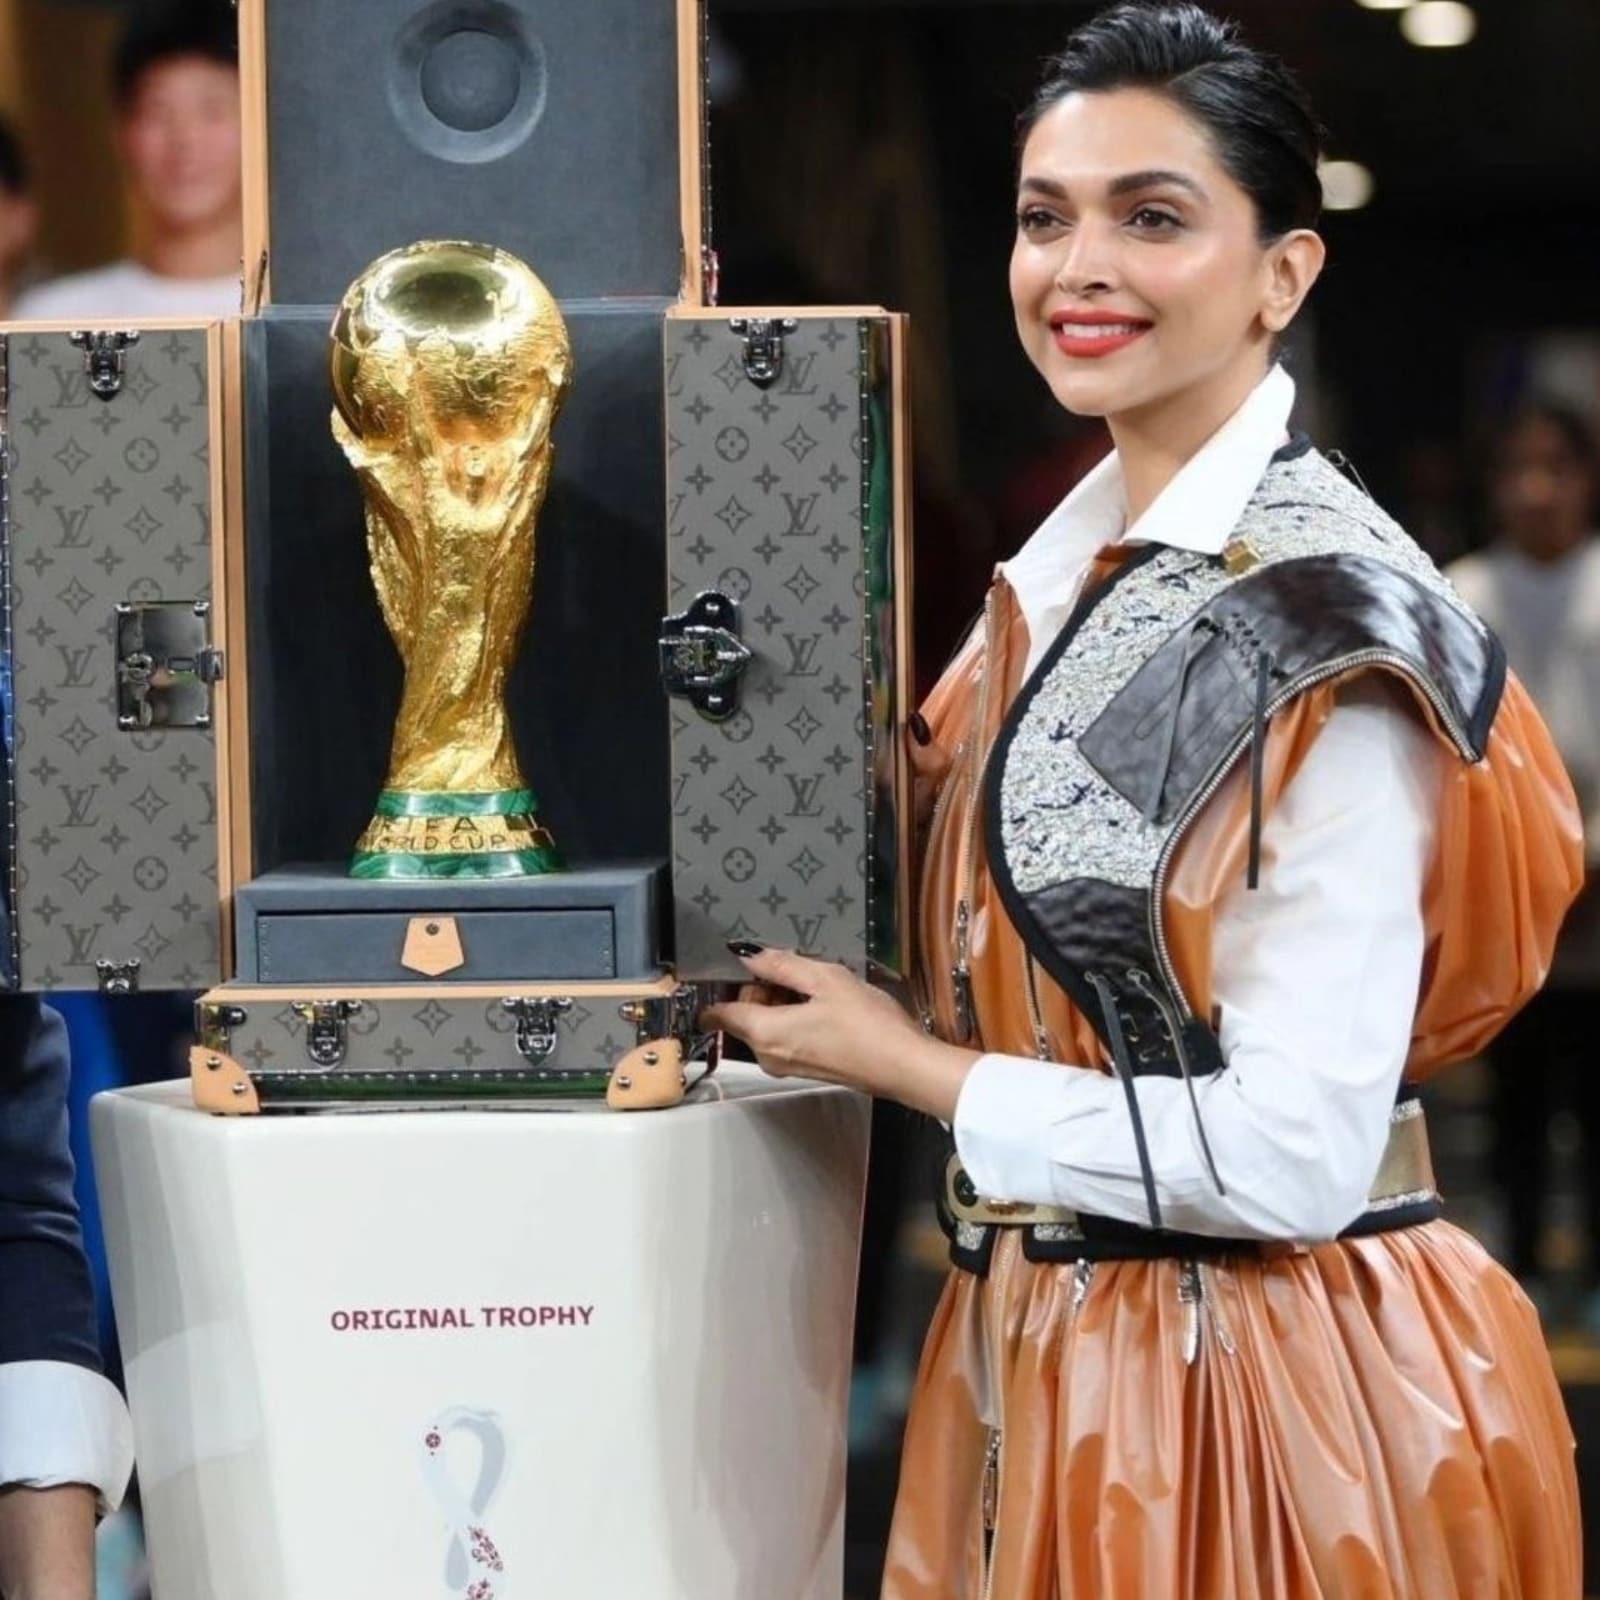 Louis Vuitton Unveils FIFA World Cup Qatar 2022 Collection